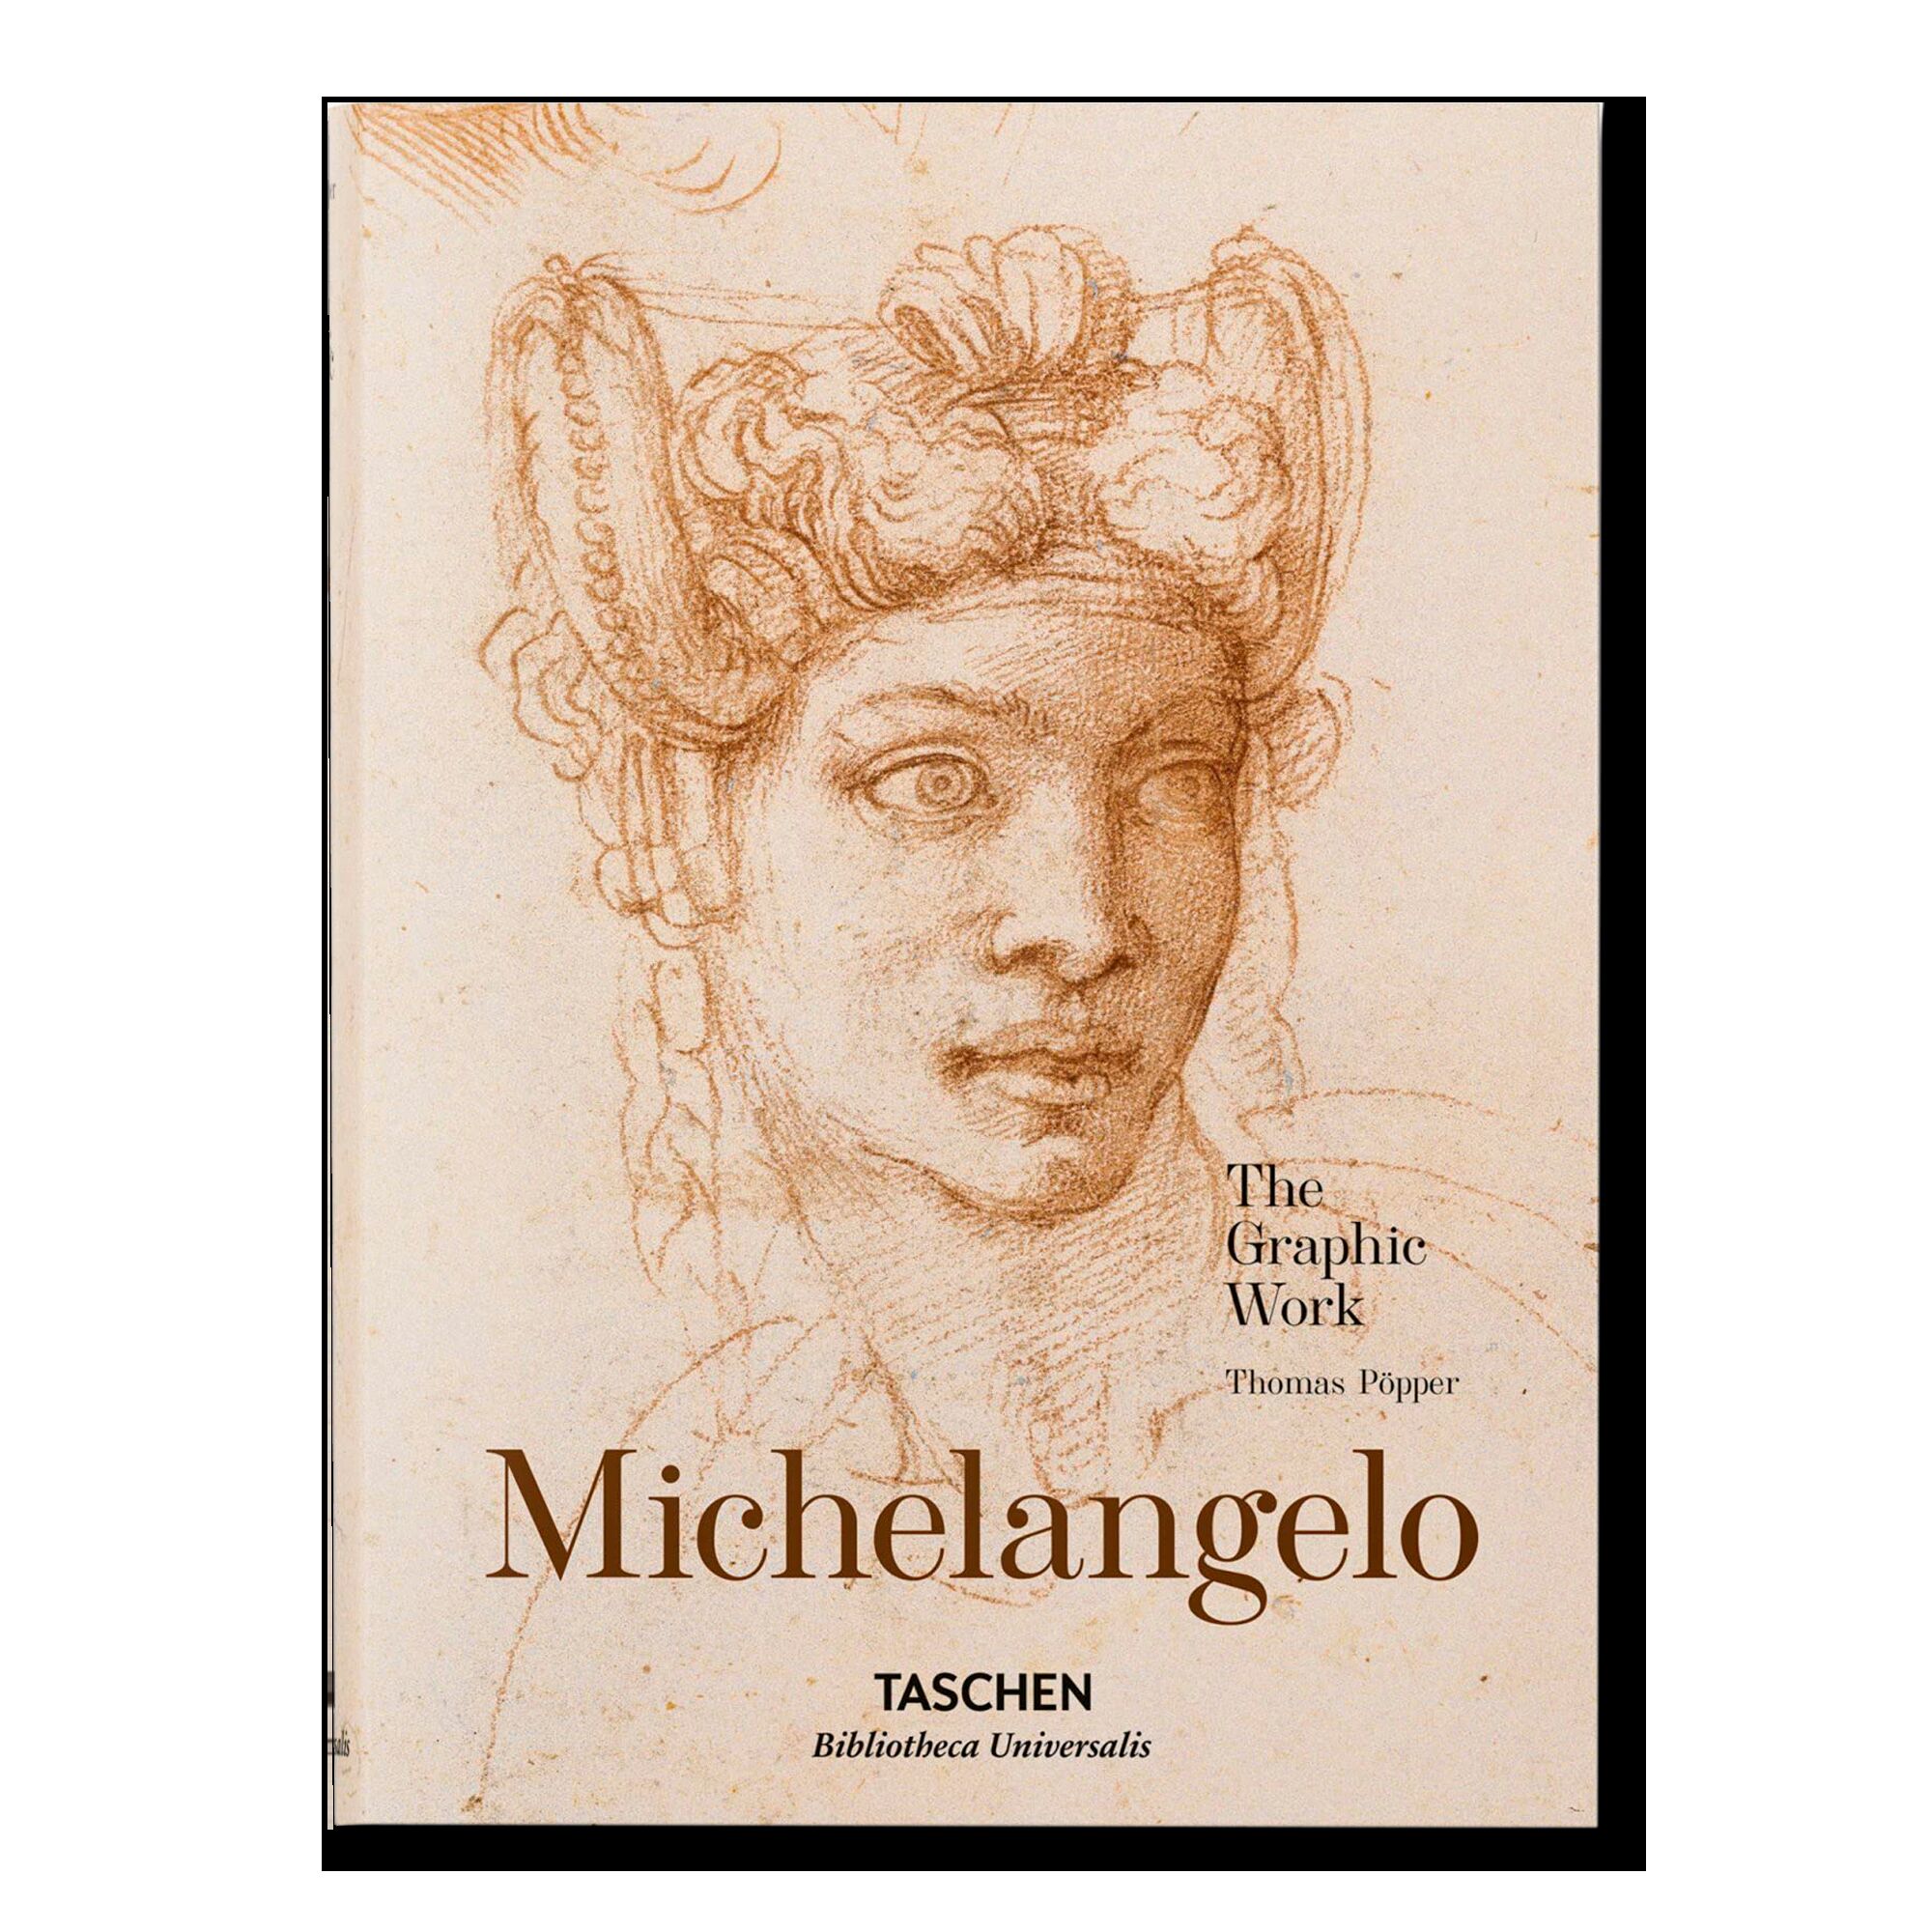 Michelangelo: The Graphic Work (Basic Art Series) 